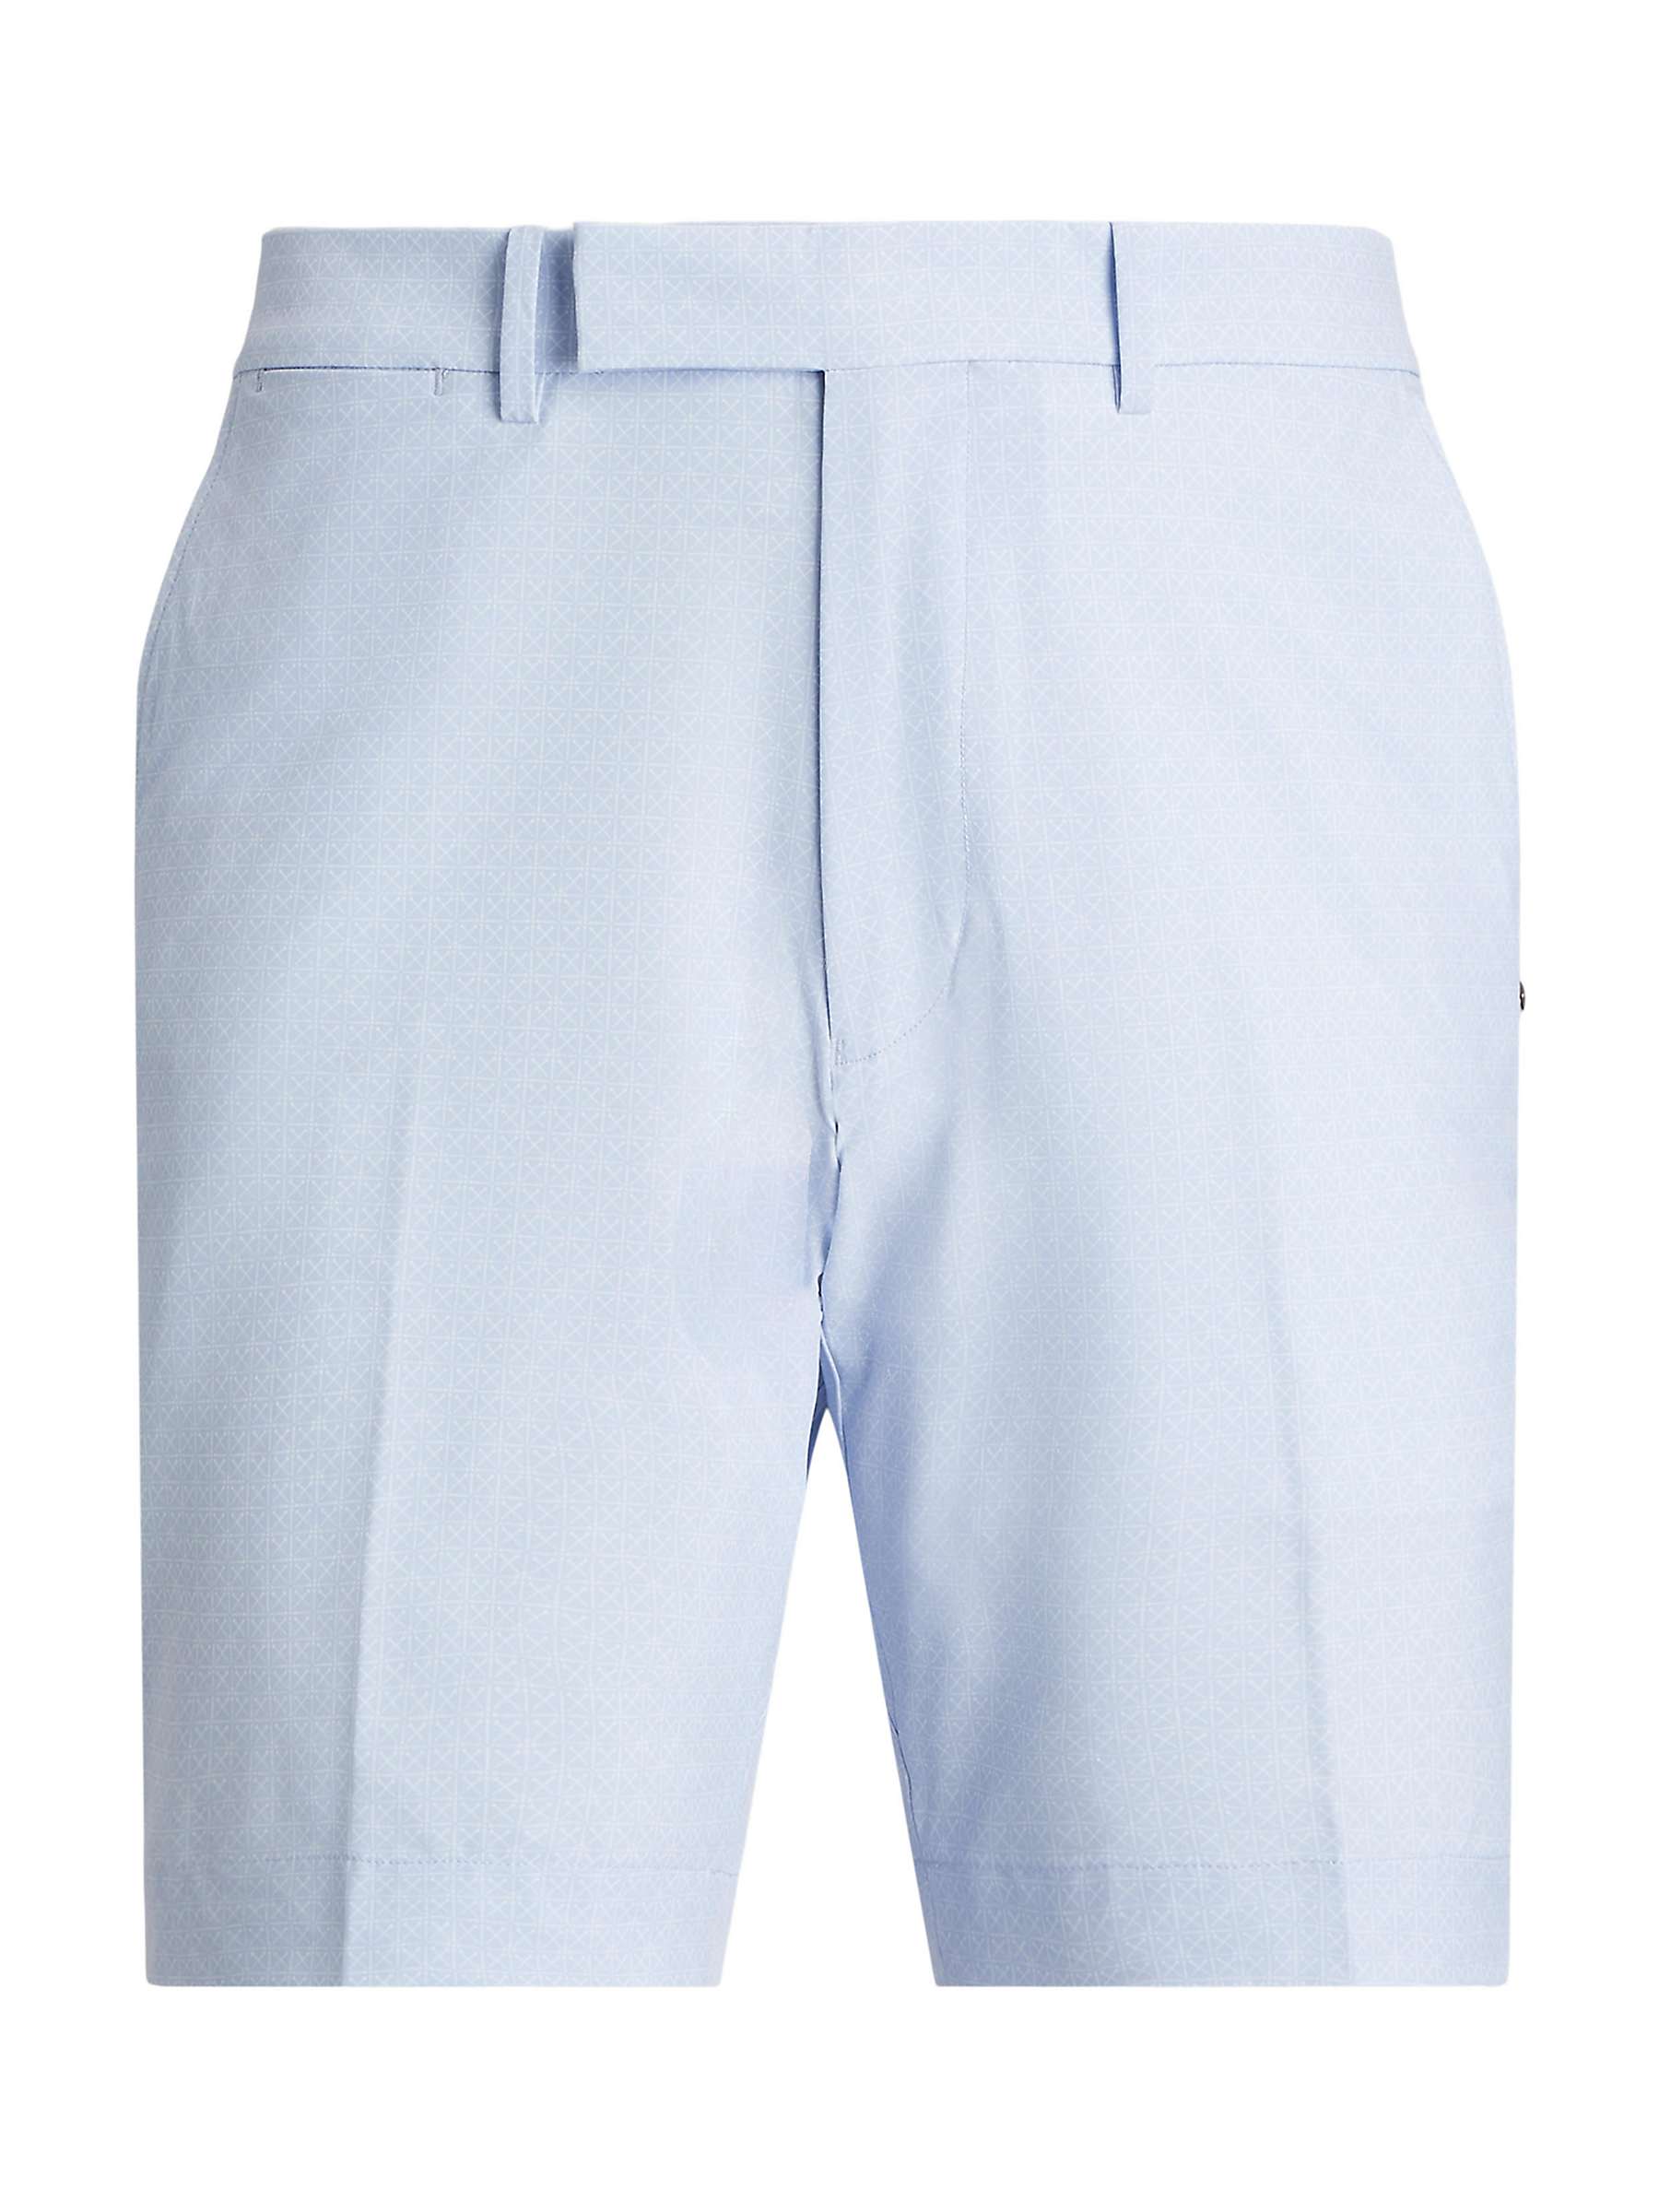 Buy Ralph Lauren Tailored Fit Stretch Short, Pale Blue Online at johnlewis.com